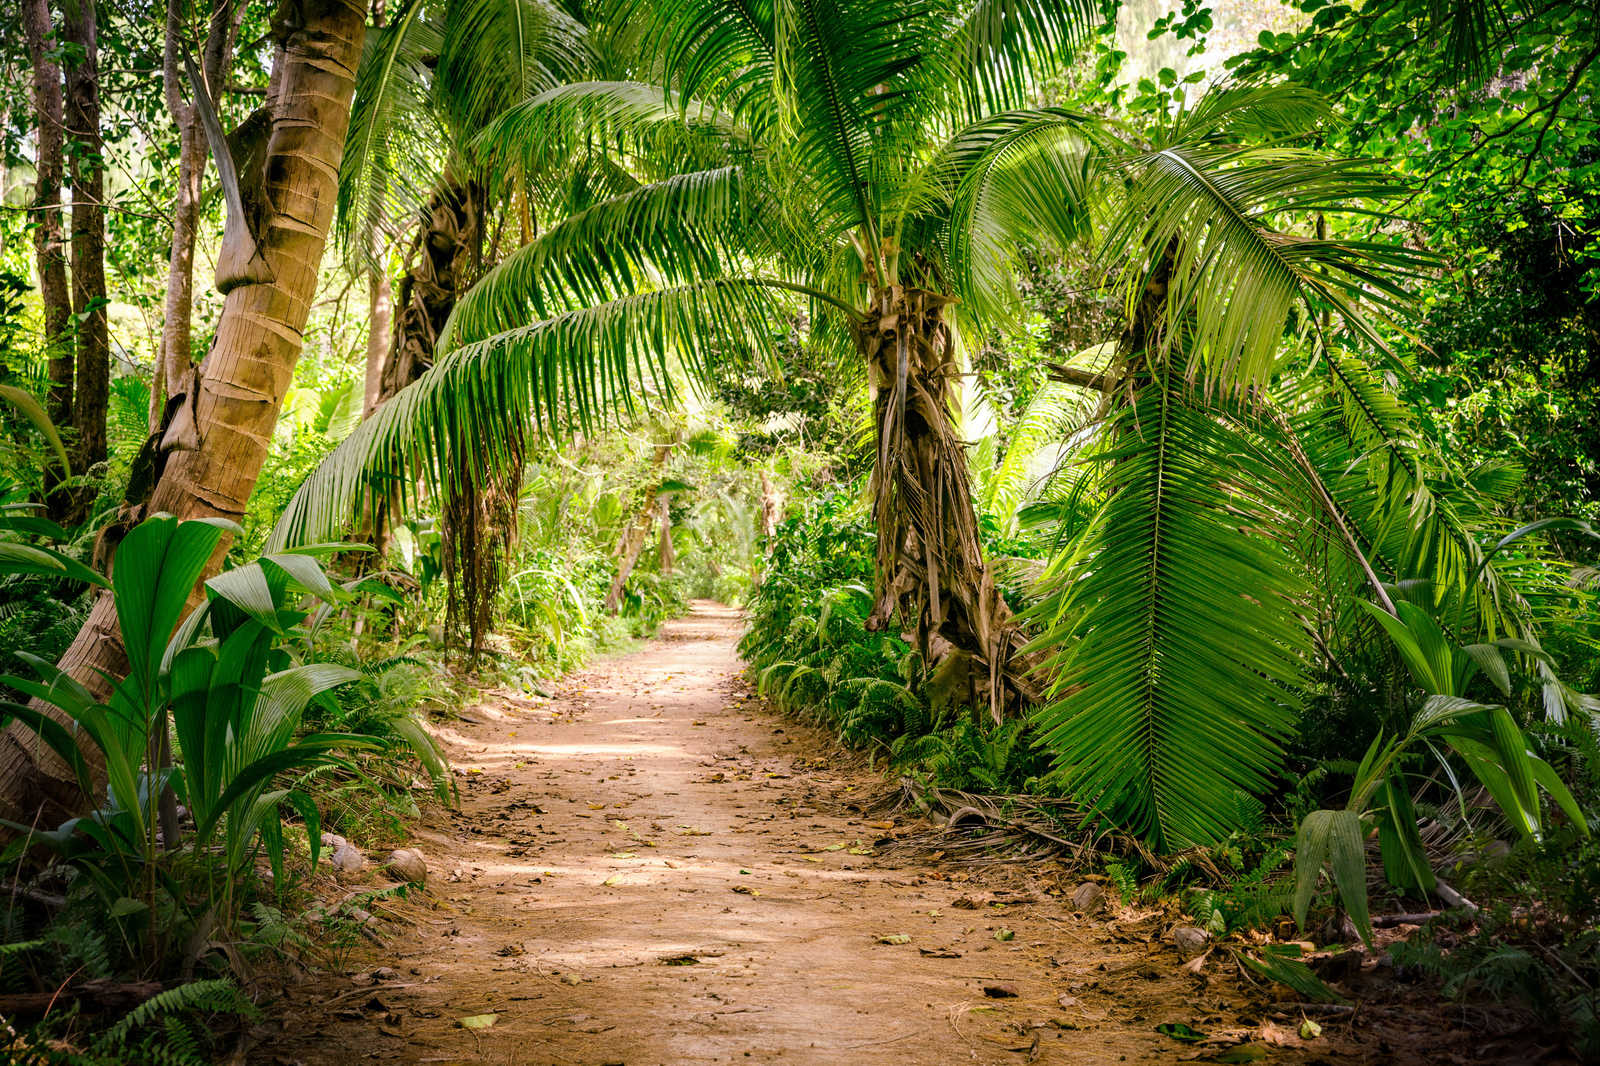             Lienzo con camino de palmeras a través de un paisaje tropical - 0,90 m x 0,60 m
        